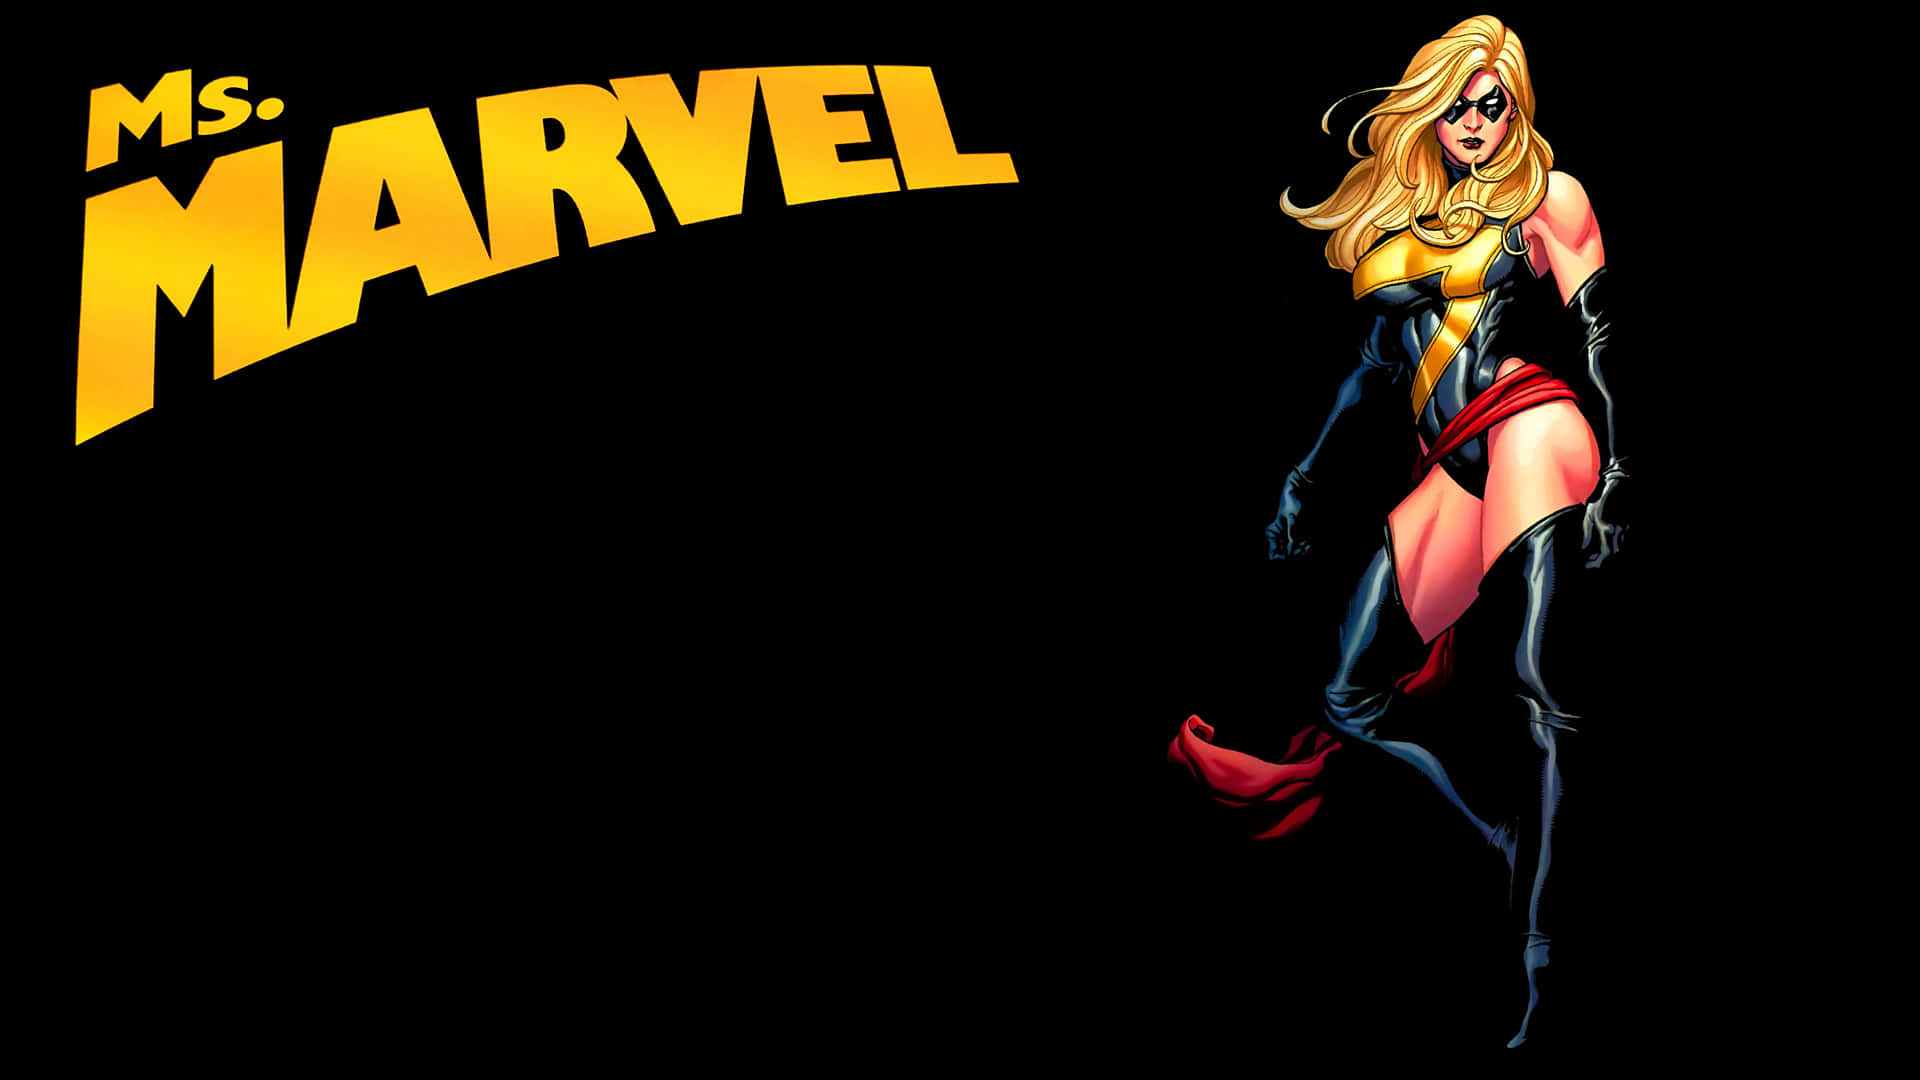 Marvelscarol Danvers, Auch Bekannt Als Captain Marvel